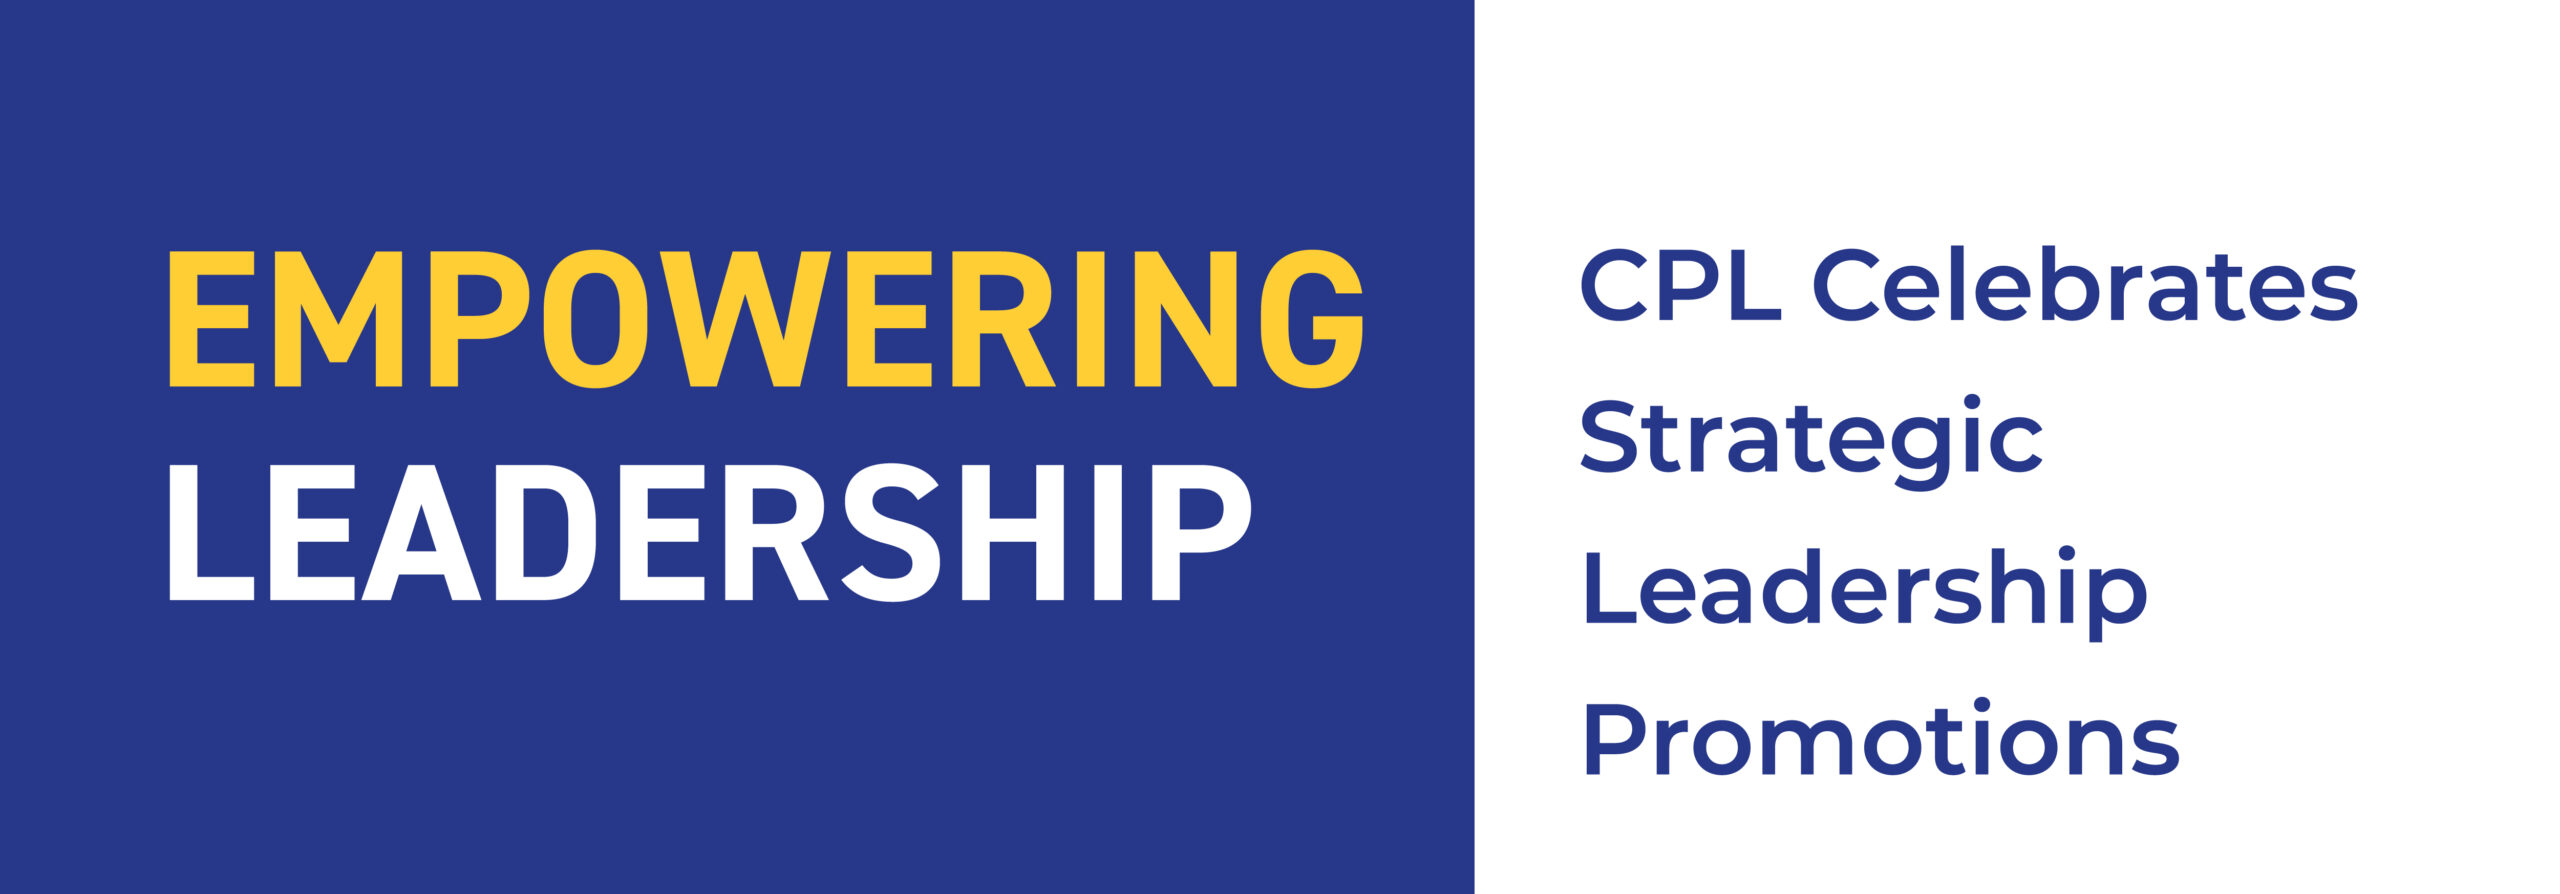 Image reads "Empowering Leadership - CPLK Celebrates Strategic Leadership Promotions"